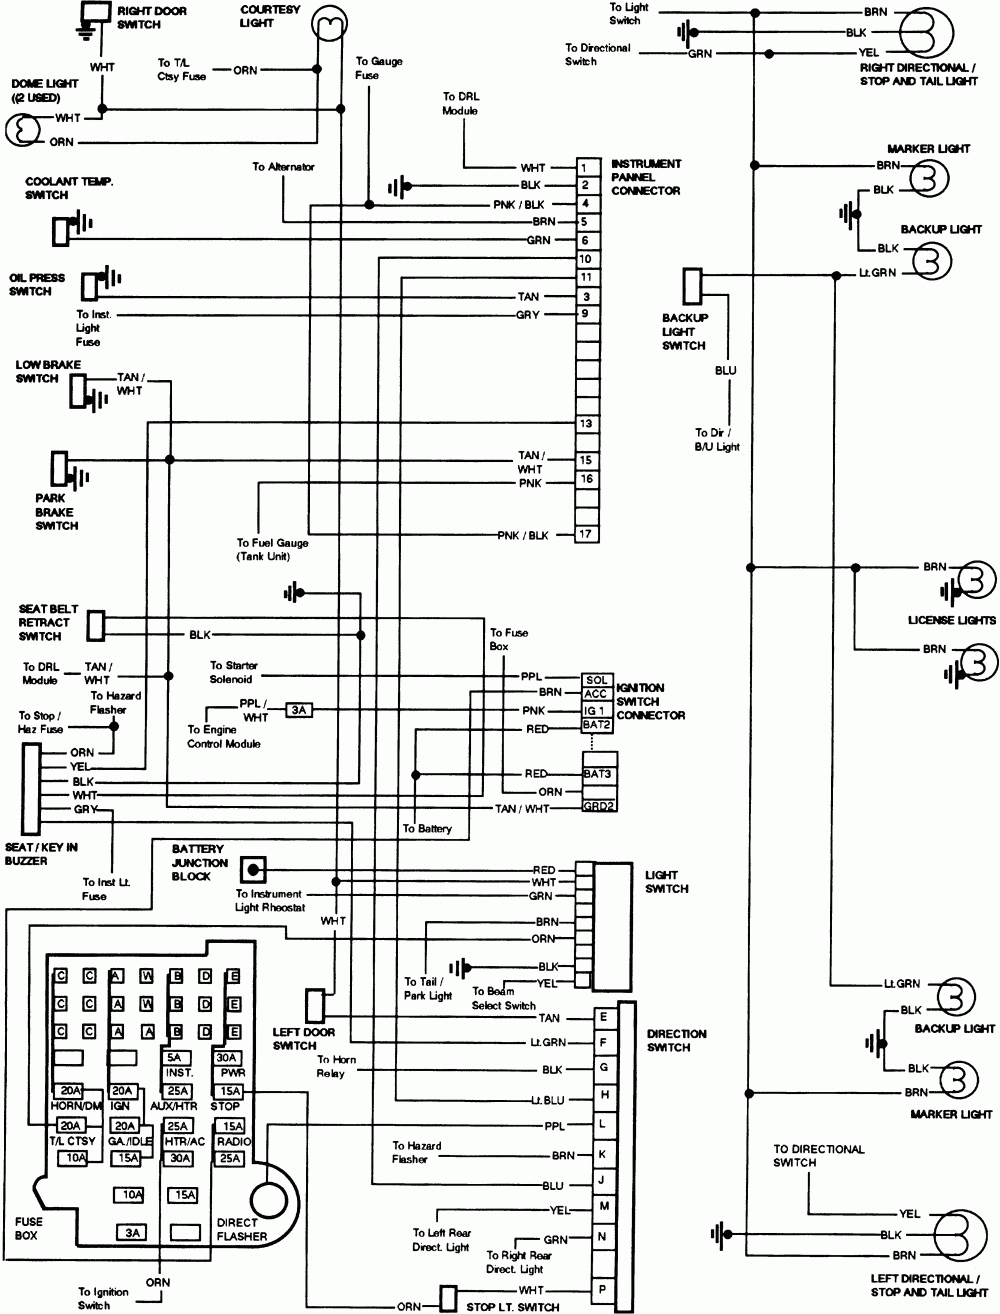 Chevy Truck Wiring Harness Diagram - Data Wiring Diagram Today - 87 Chevy Truck Wiring Diagram